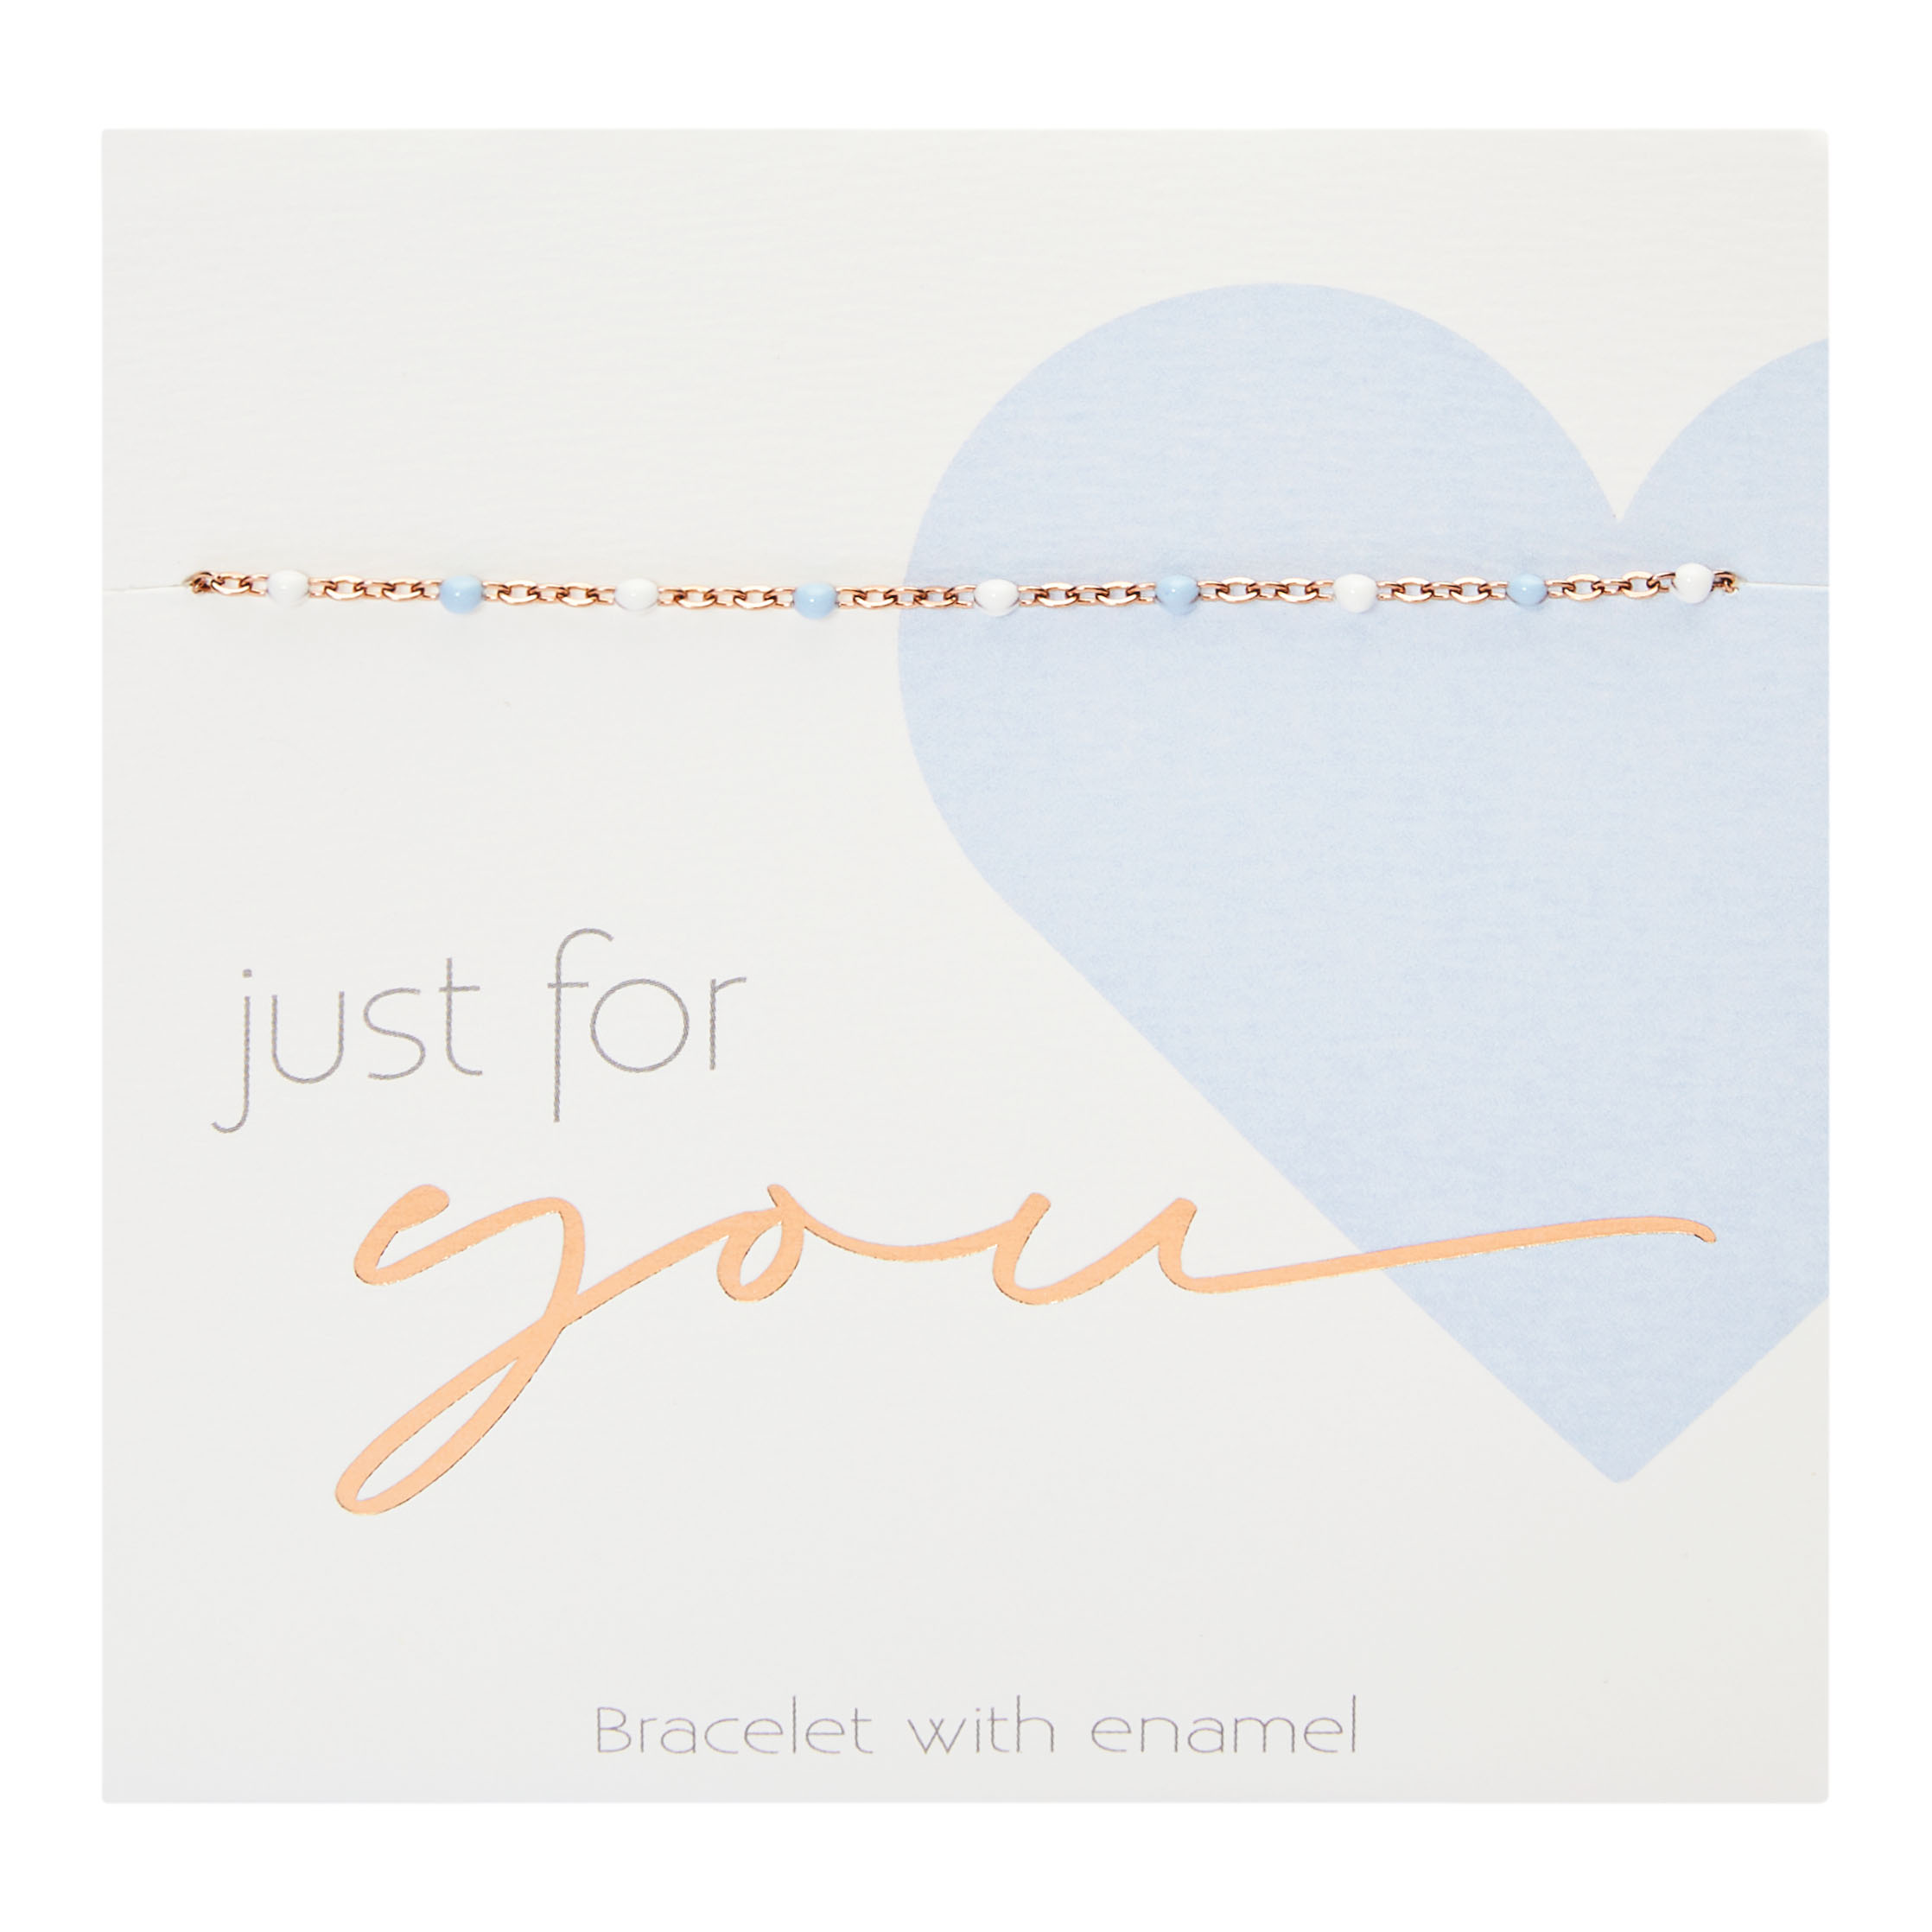 Armband - "Just for you" - rosévergoldet - hellblau & weiß